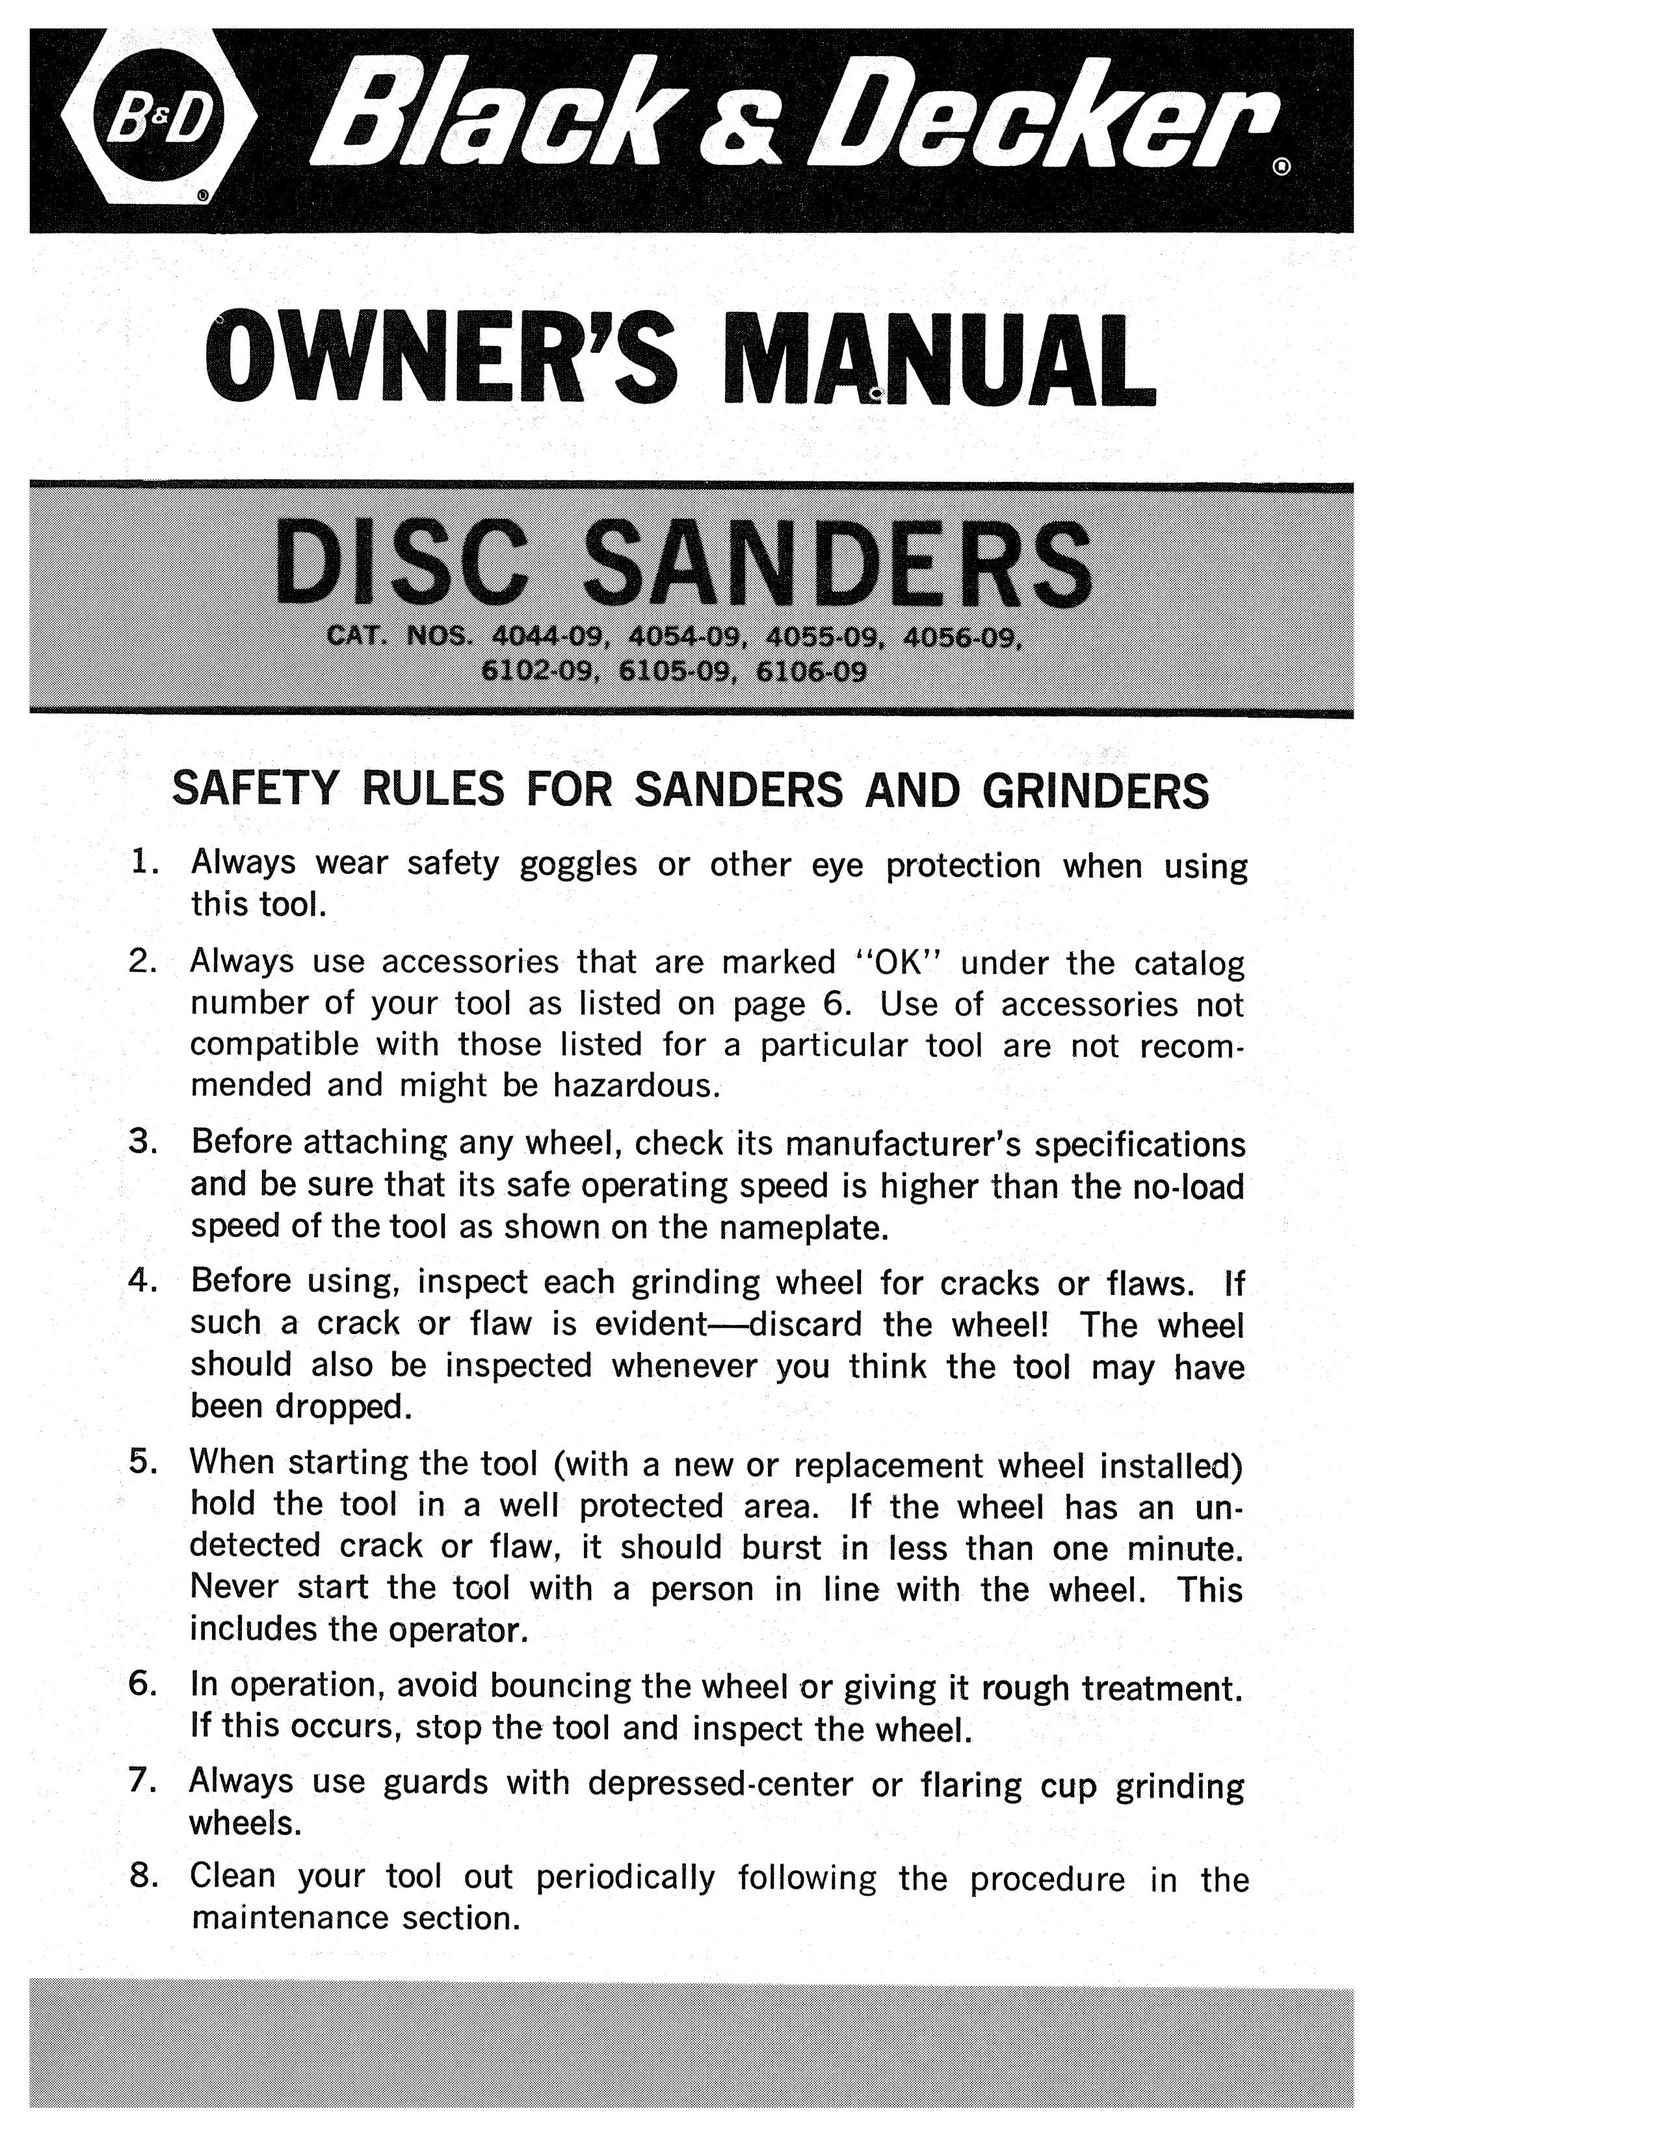 Black & Decker 4044-09 Sander User Manual